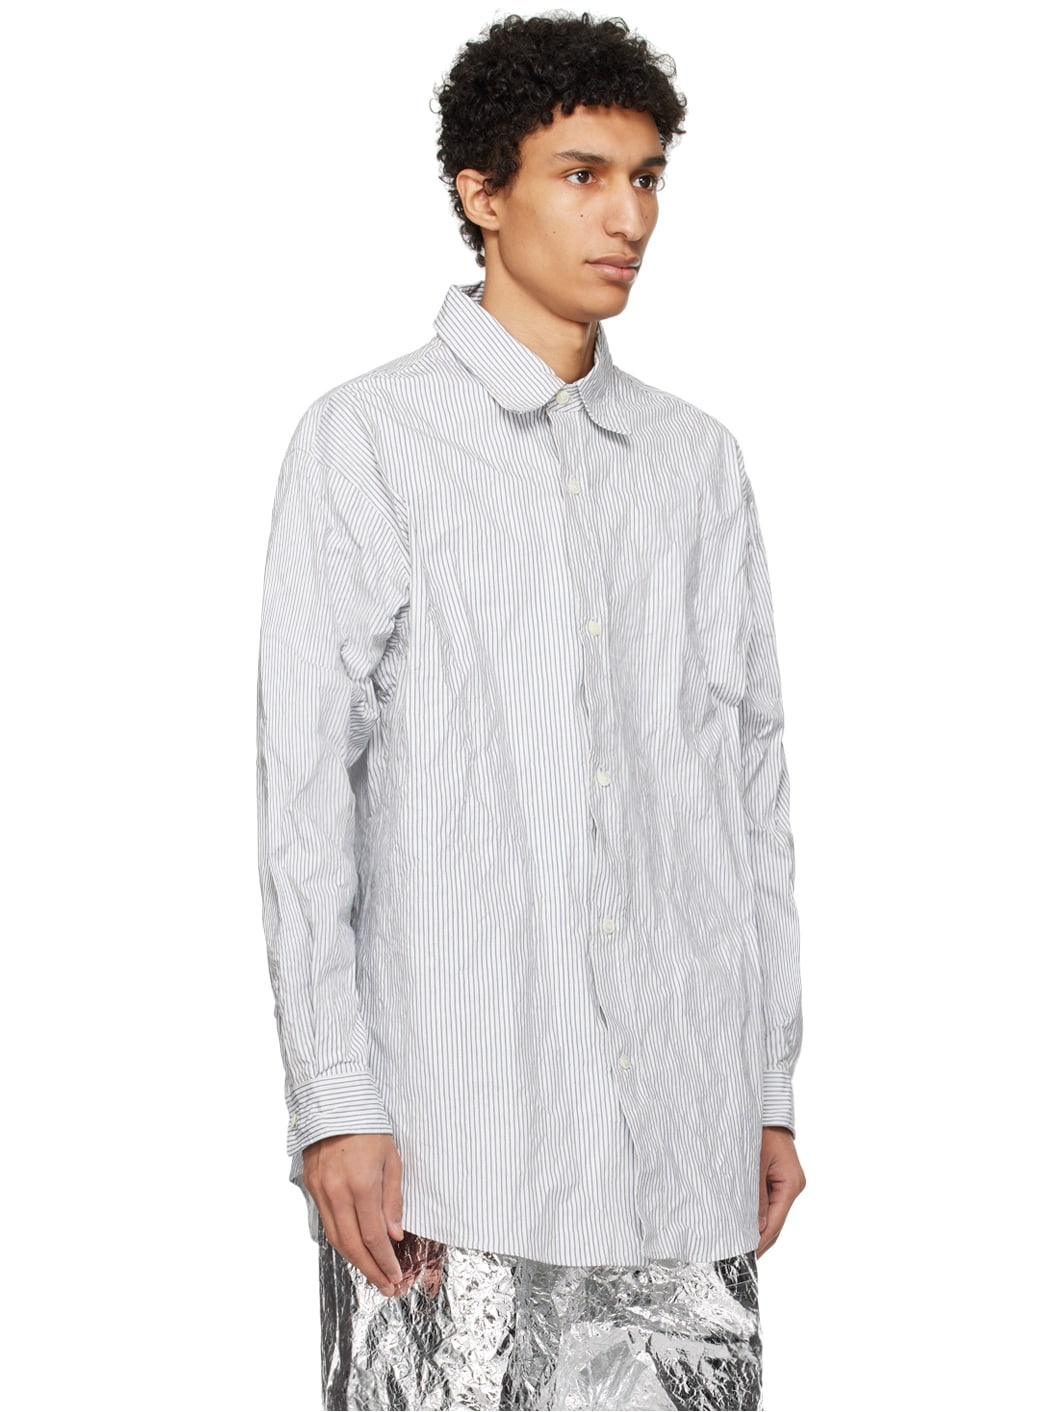 White & Navy Pinstripe Shirt - 2